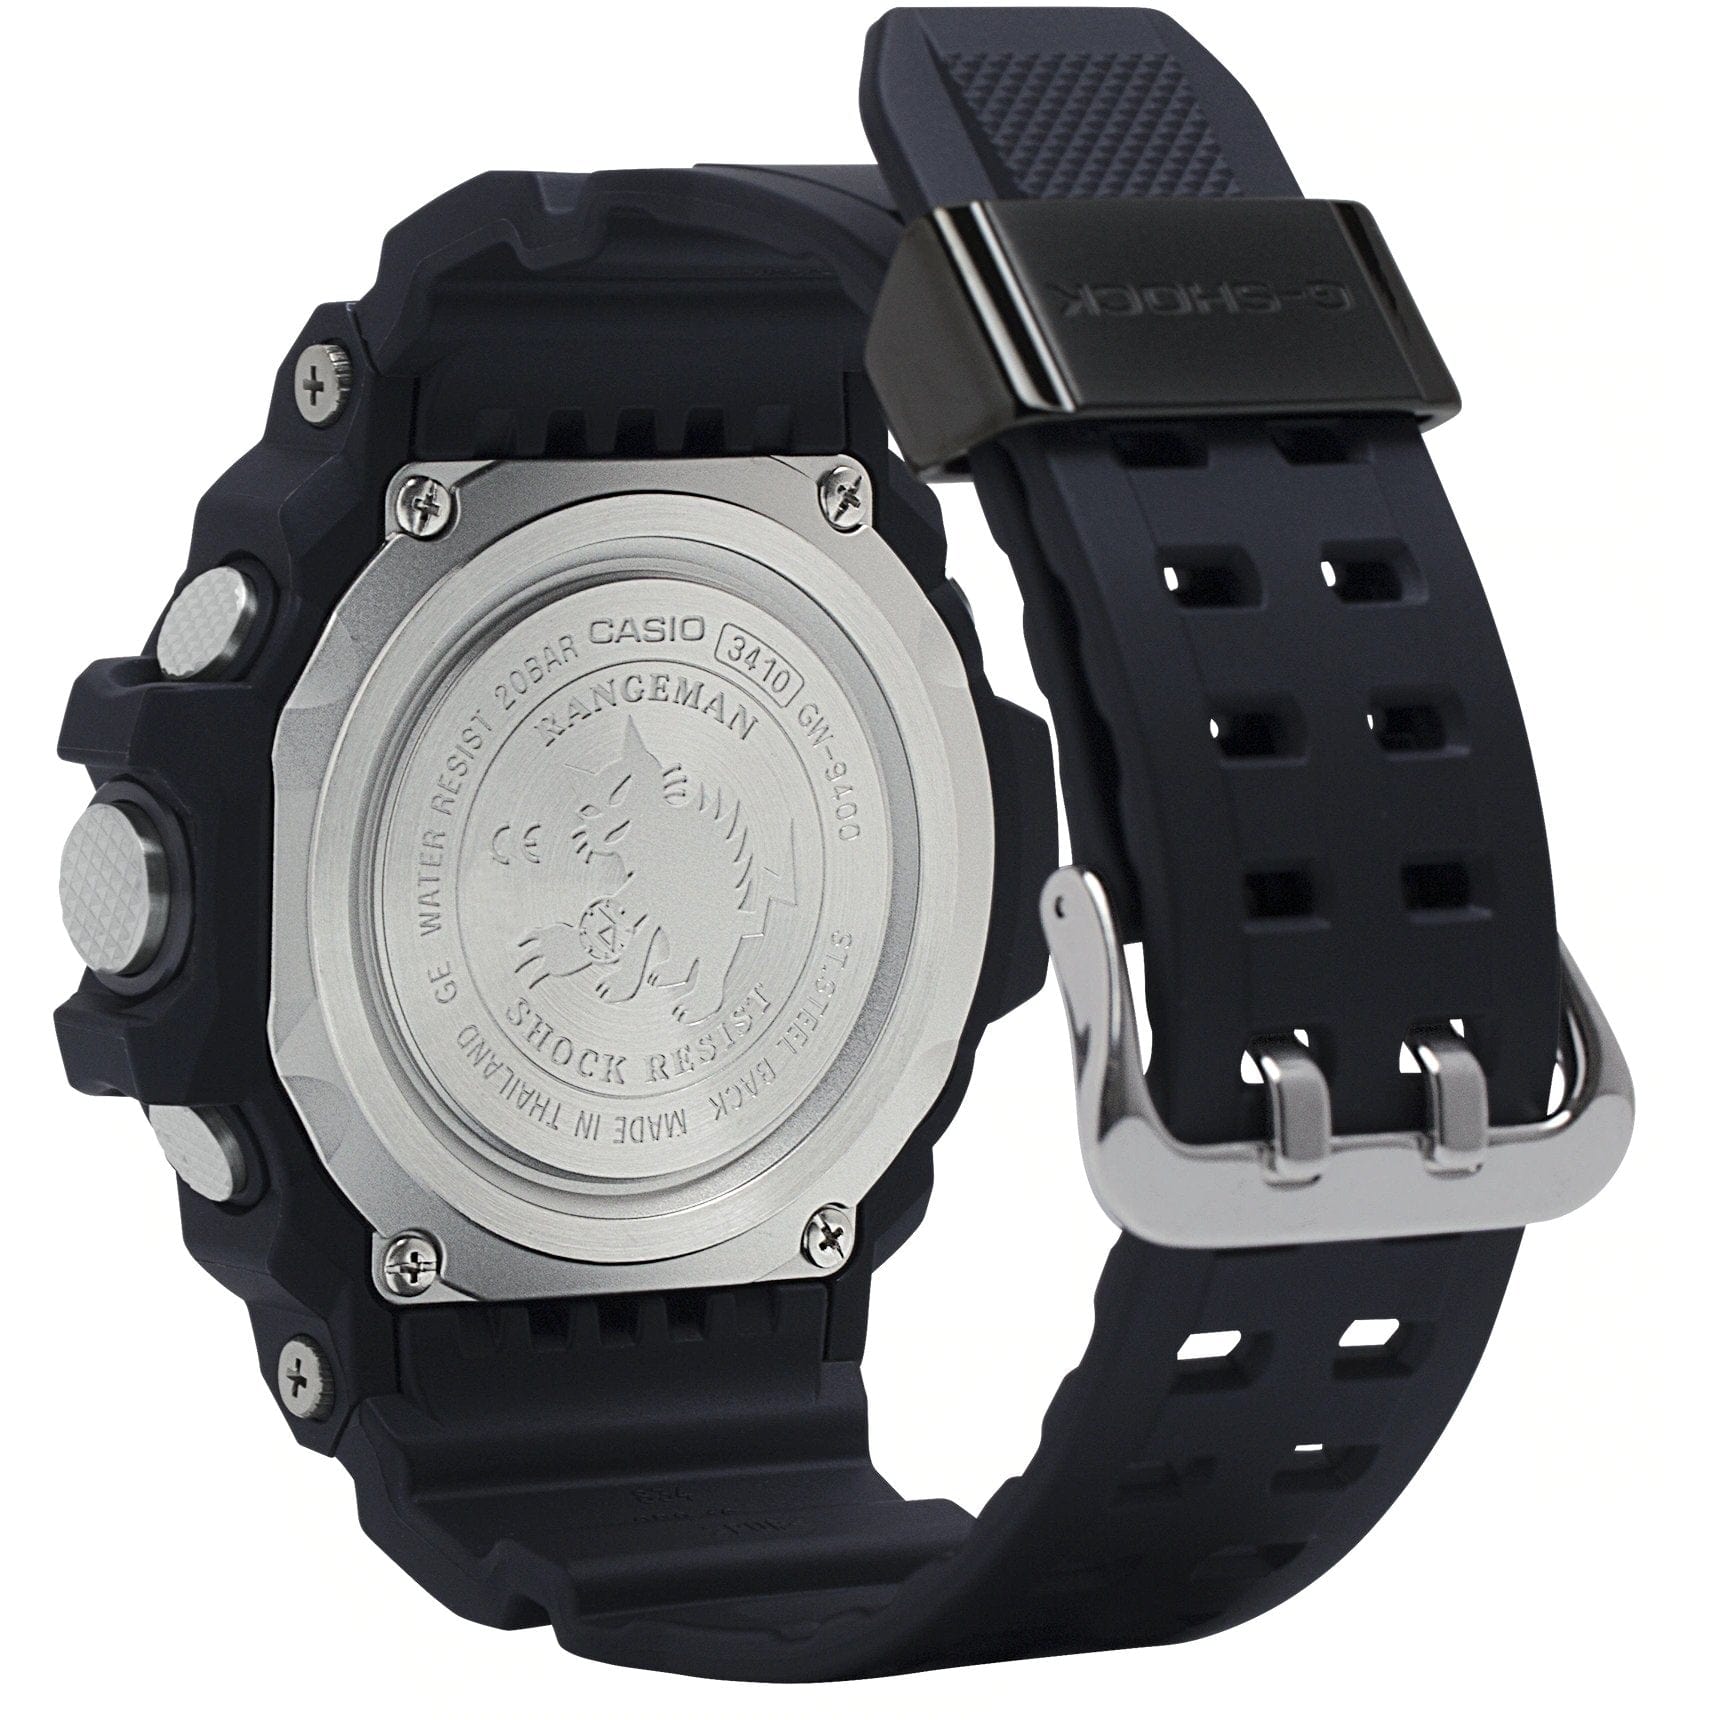 Casio Rangeman G-Shock Black on Black Solar Atomic Watch GW9400-1B